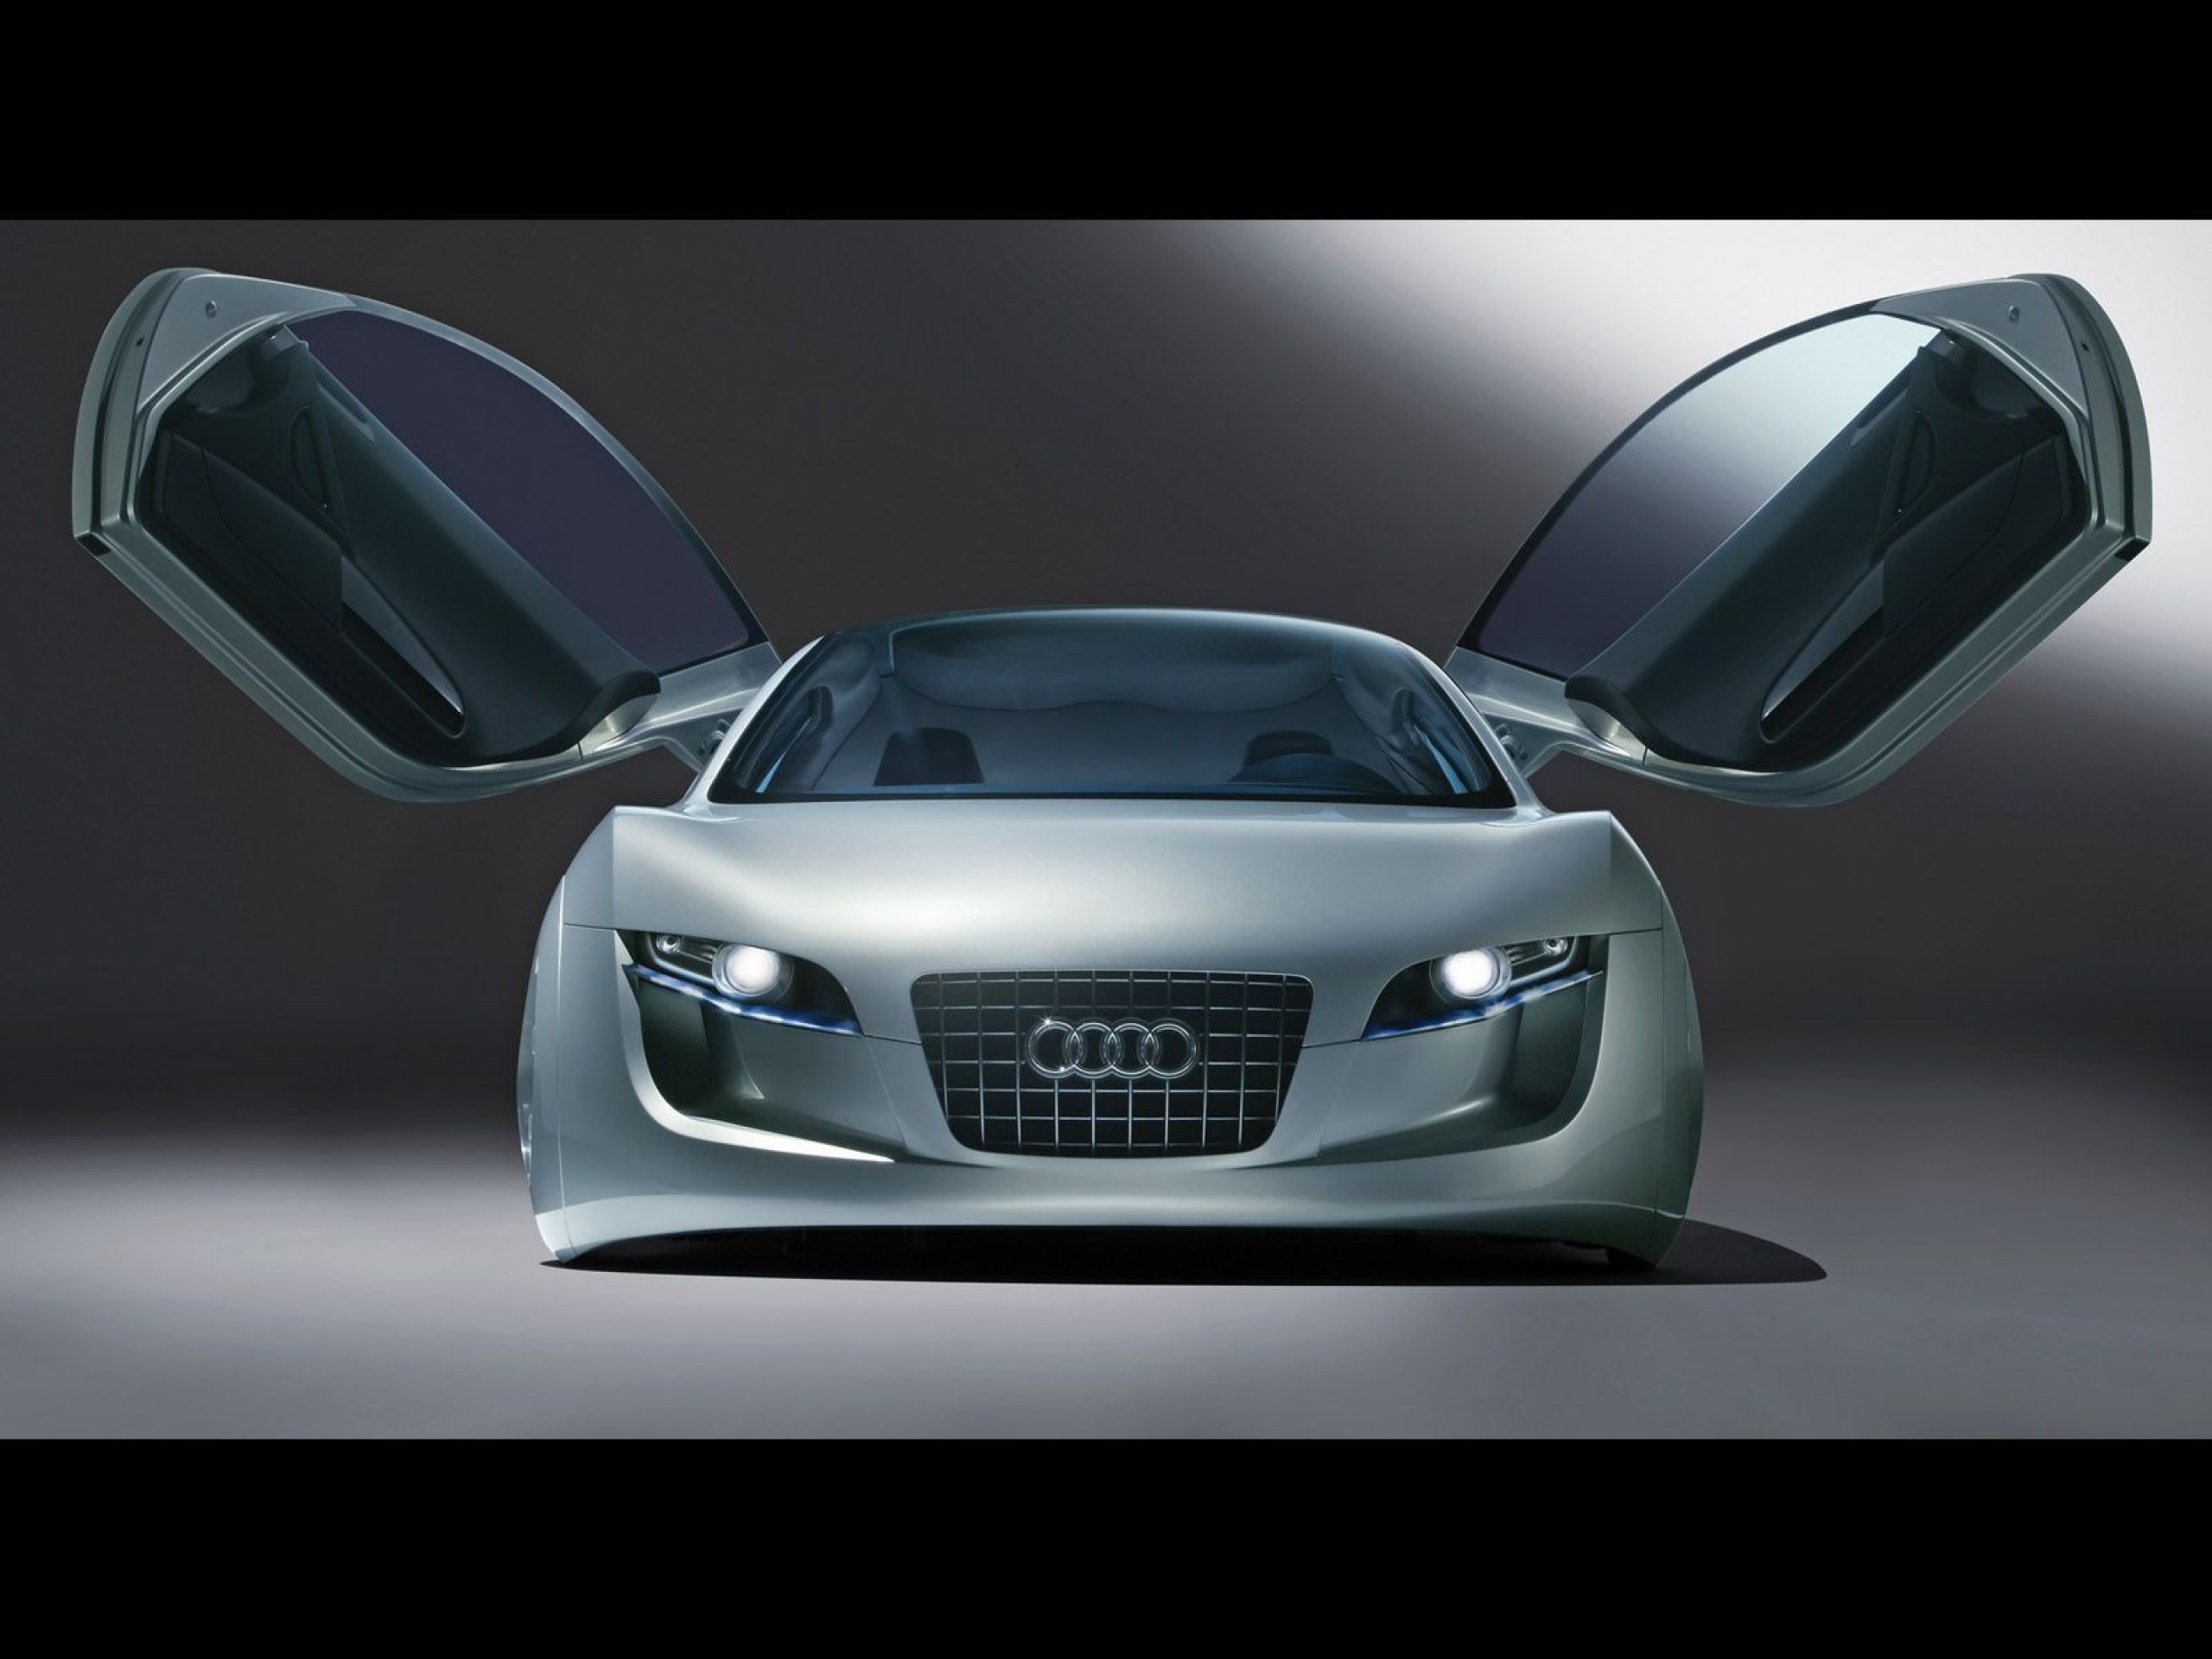 Audi Rsq Hybrid Car Images Wallpaper Hd Free - Audi Car Hd Photo Download , HD Wallpaper & Backgrounds